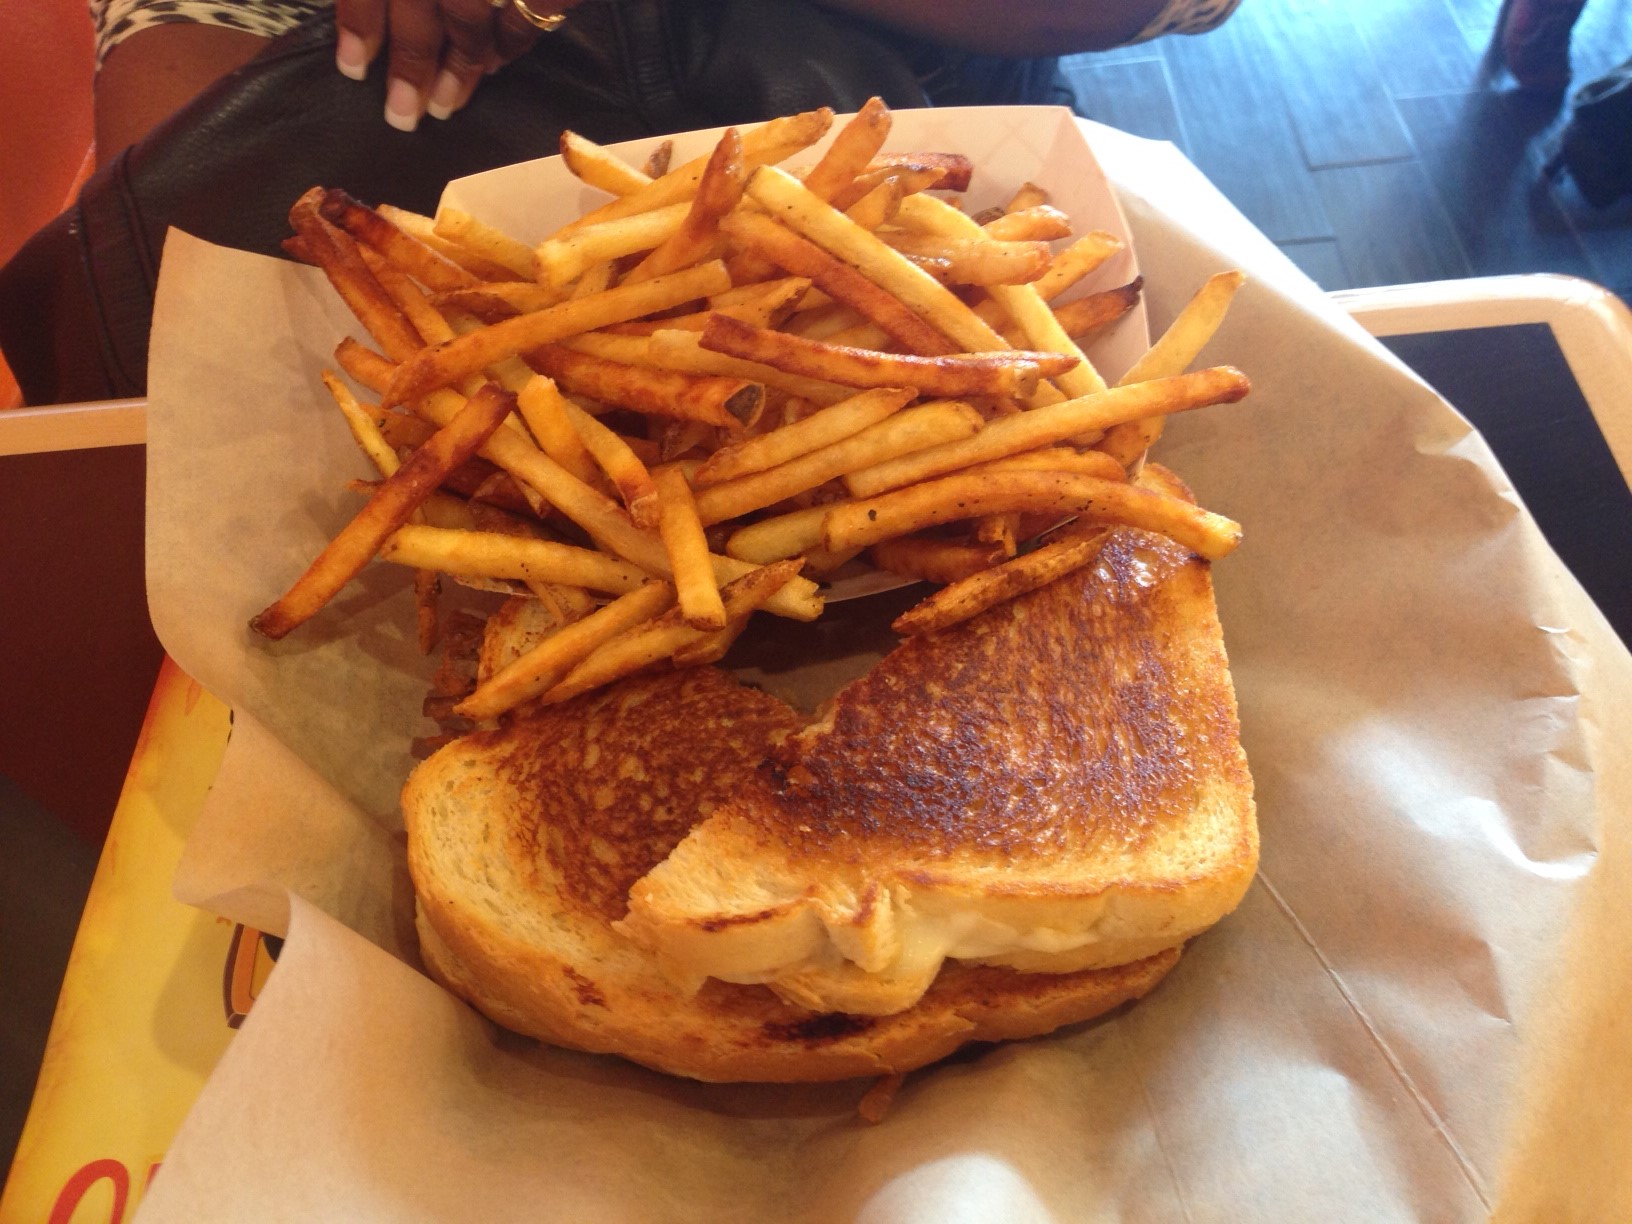 Sandwich-and-fries.jpg